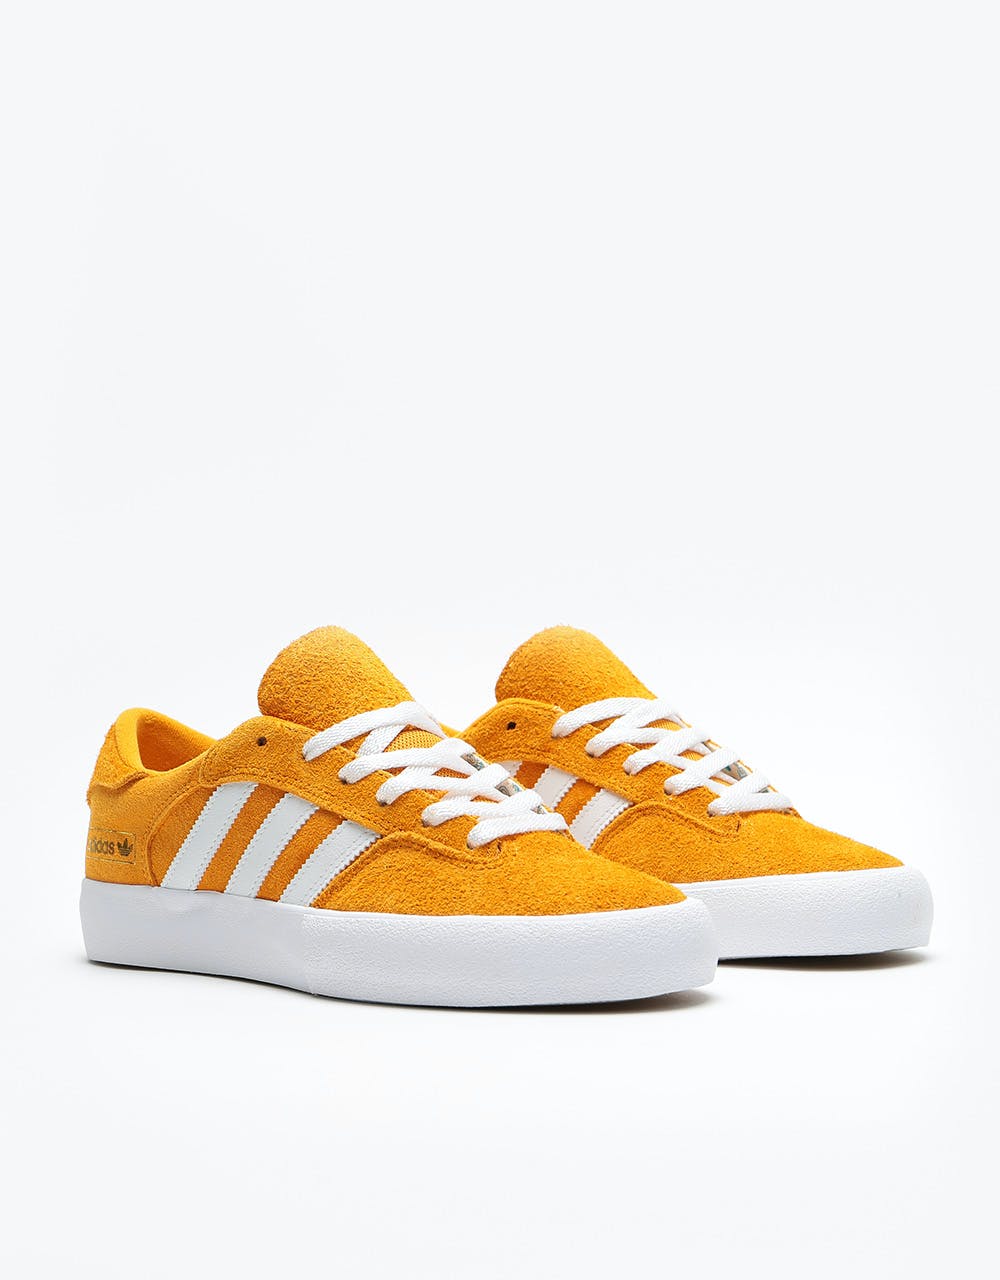 Adidas Matchbreak Super Skate Shoes - Tactile Yellow/White/Gold Metall